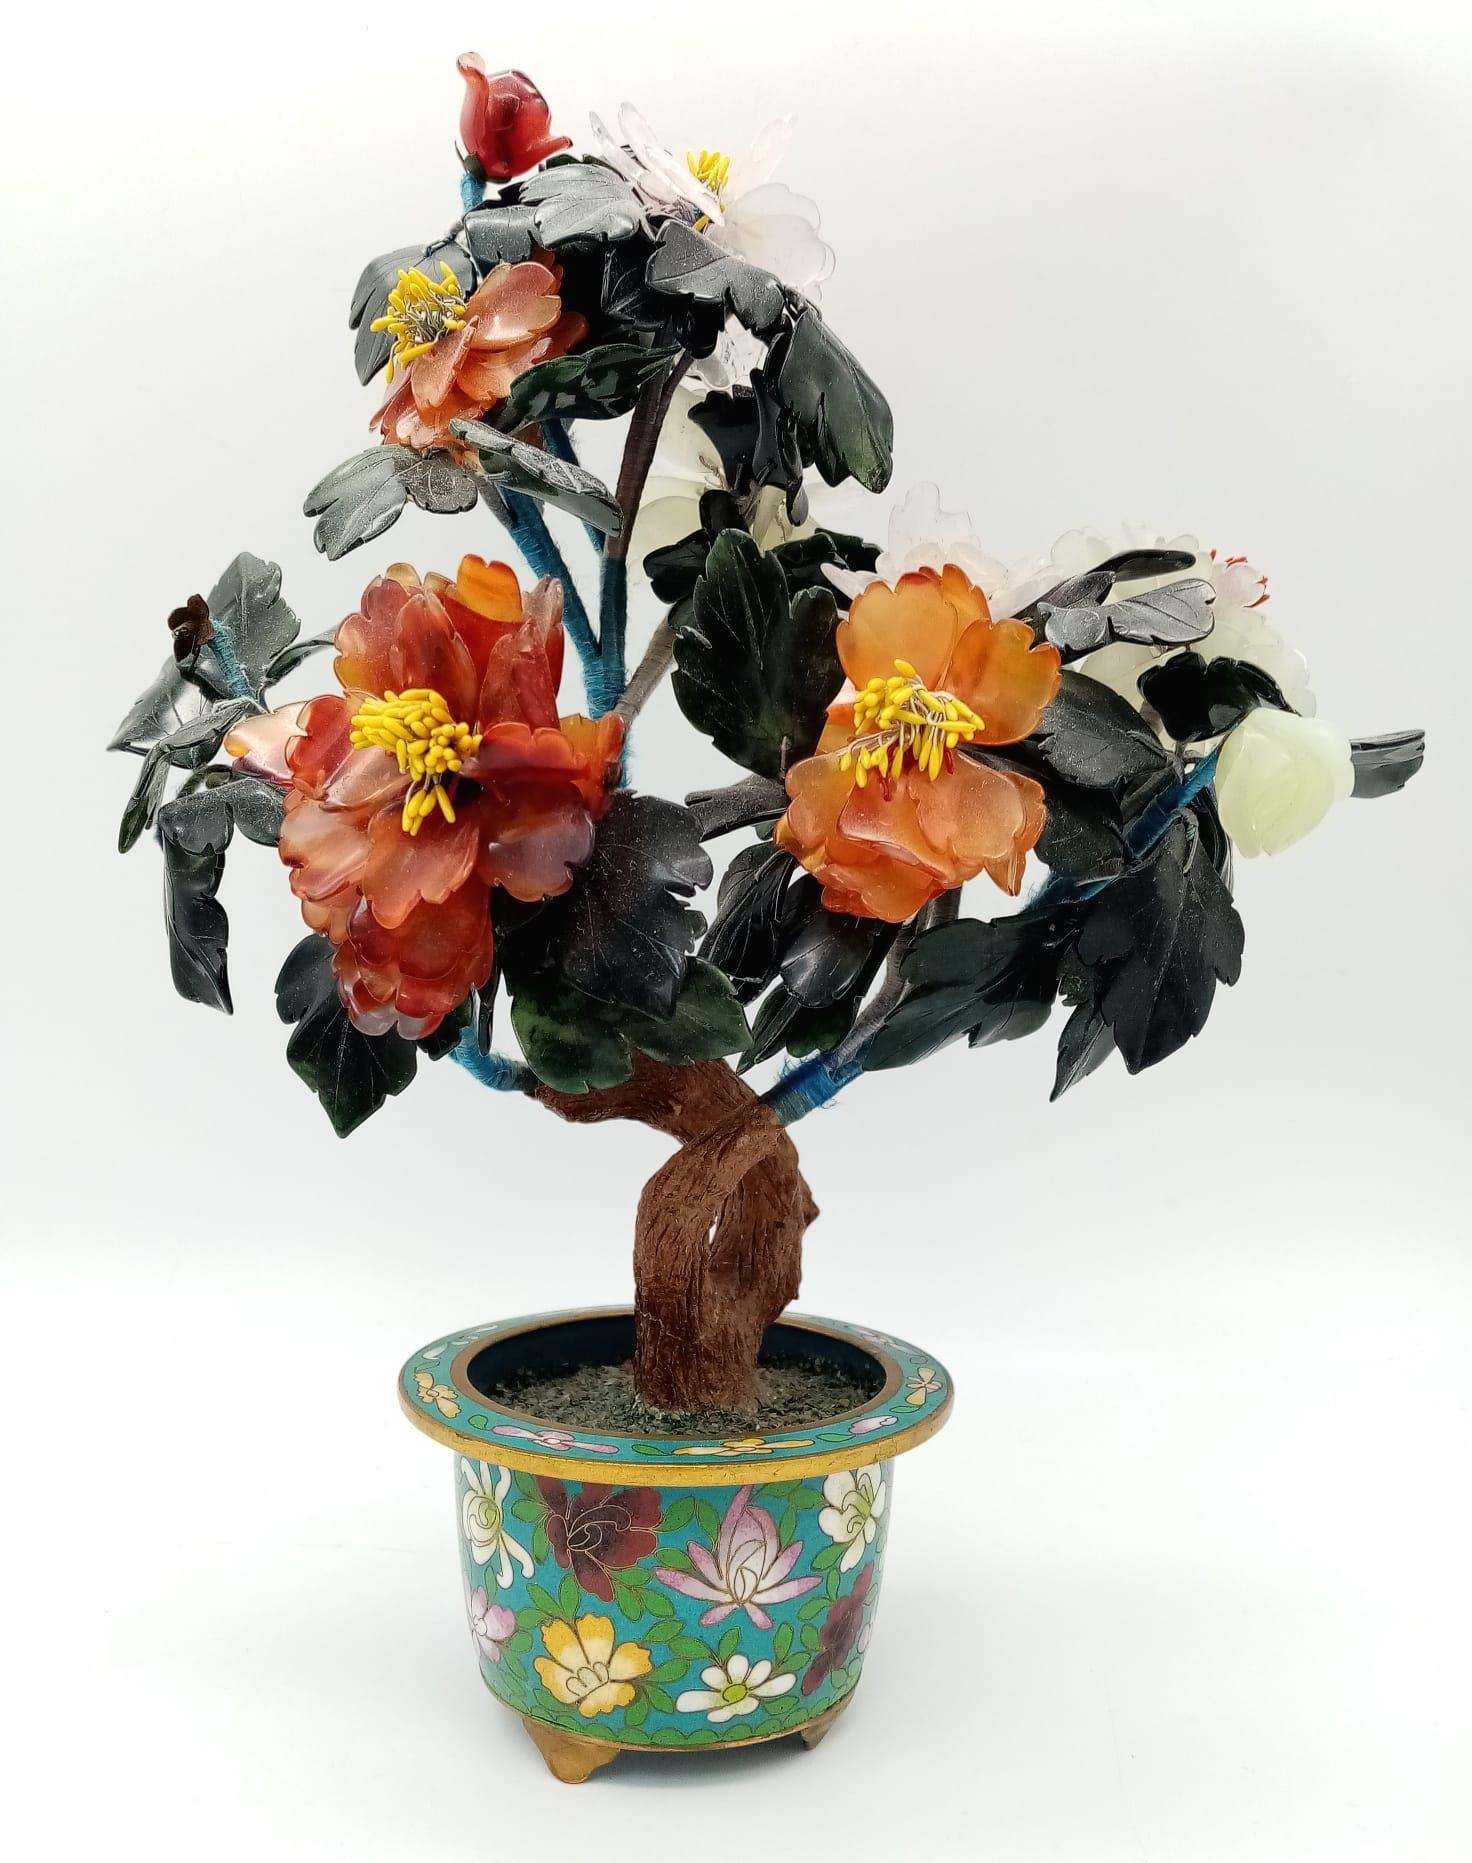 An Antique Jade Bonsai Blossom Tree in Decorative Brass Pot. One broken foot at base - but still